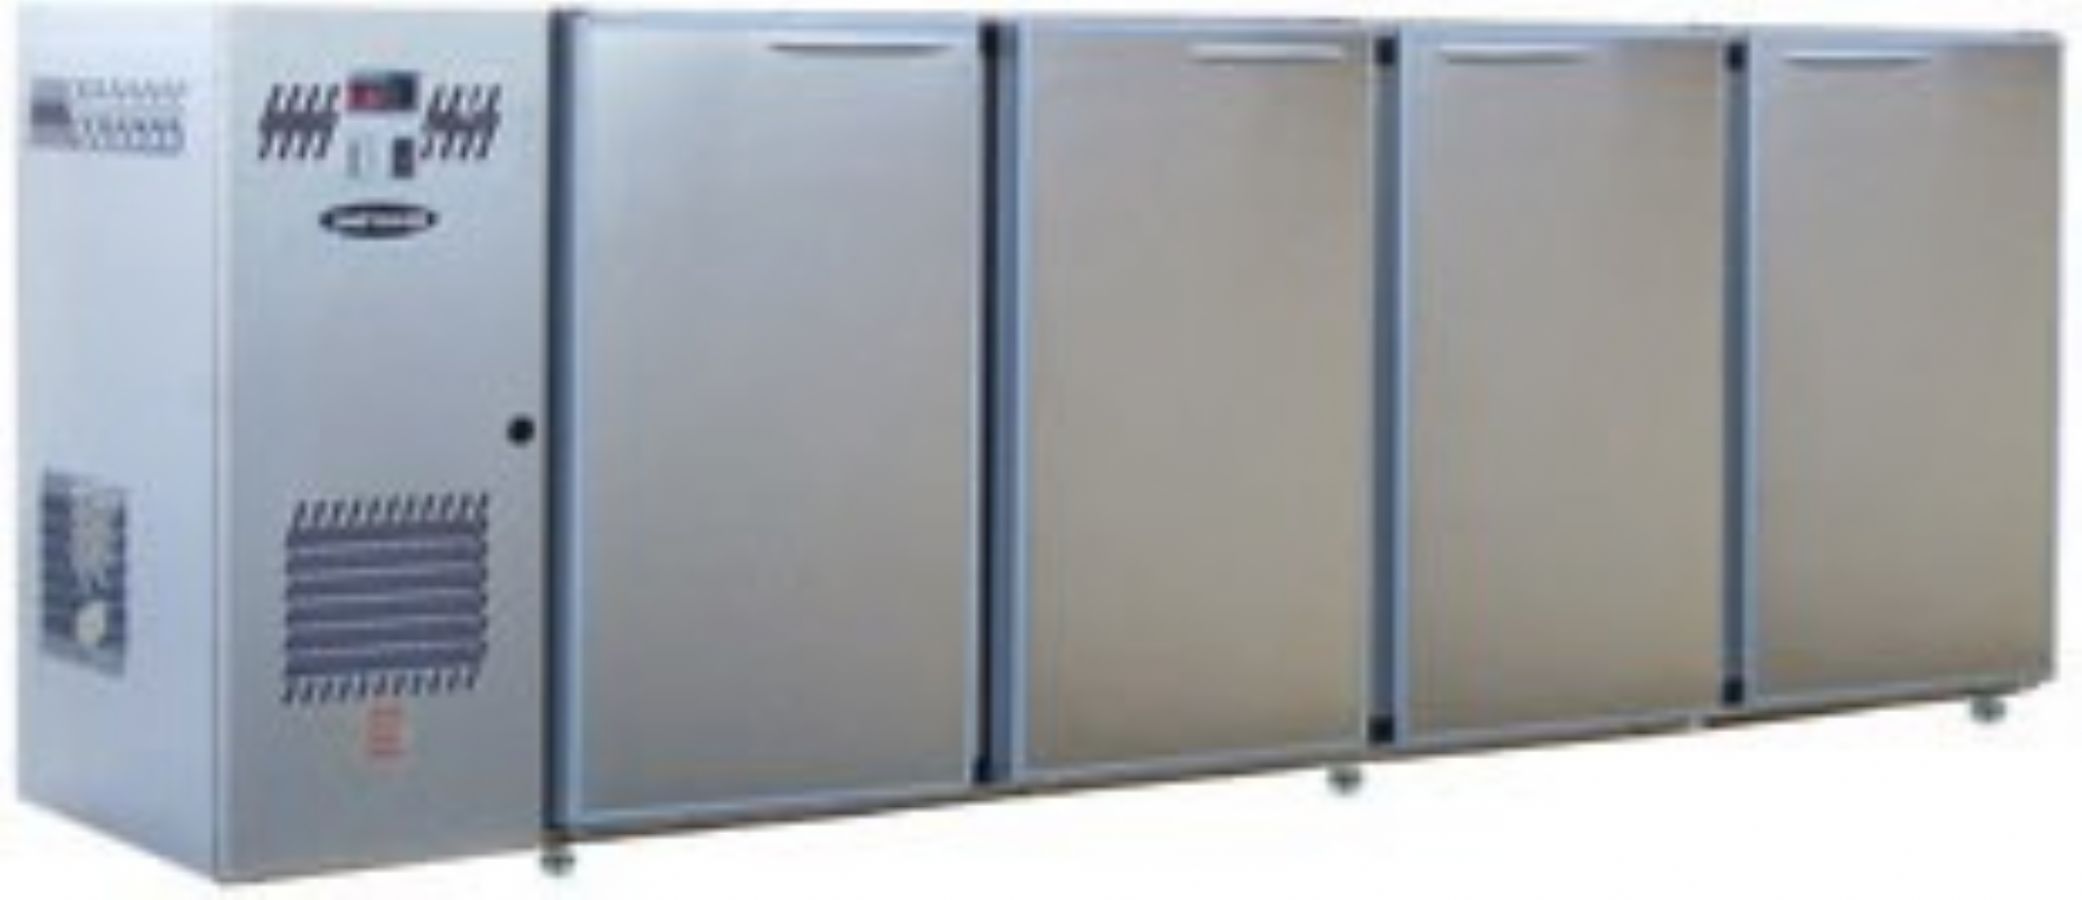 Arrire-bar Inox - Srie CLASSIC - Groupe log - 4 moyennes portes pleines - 610 litres - U54MI